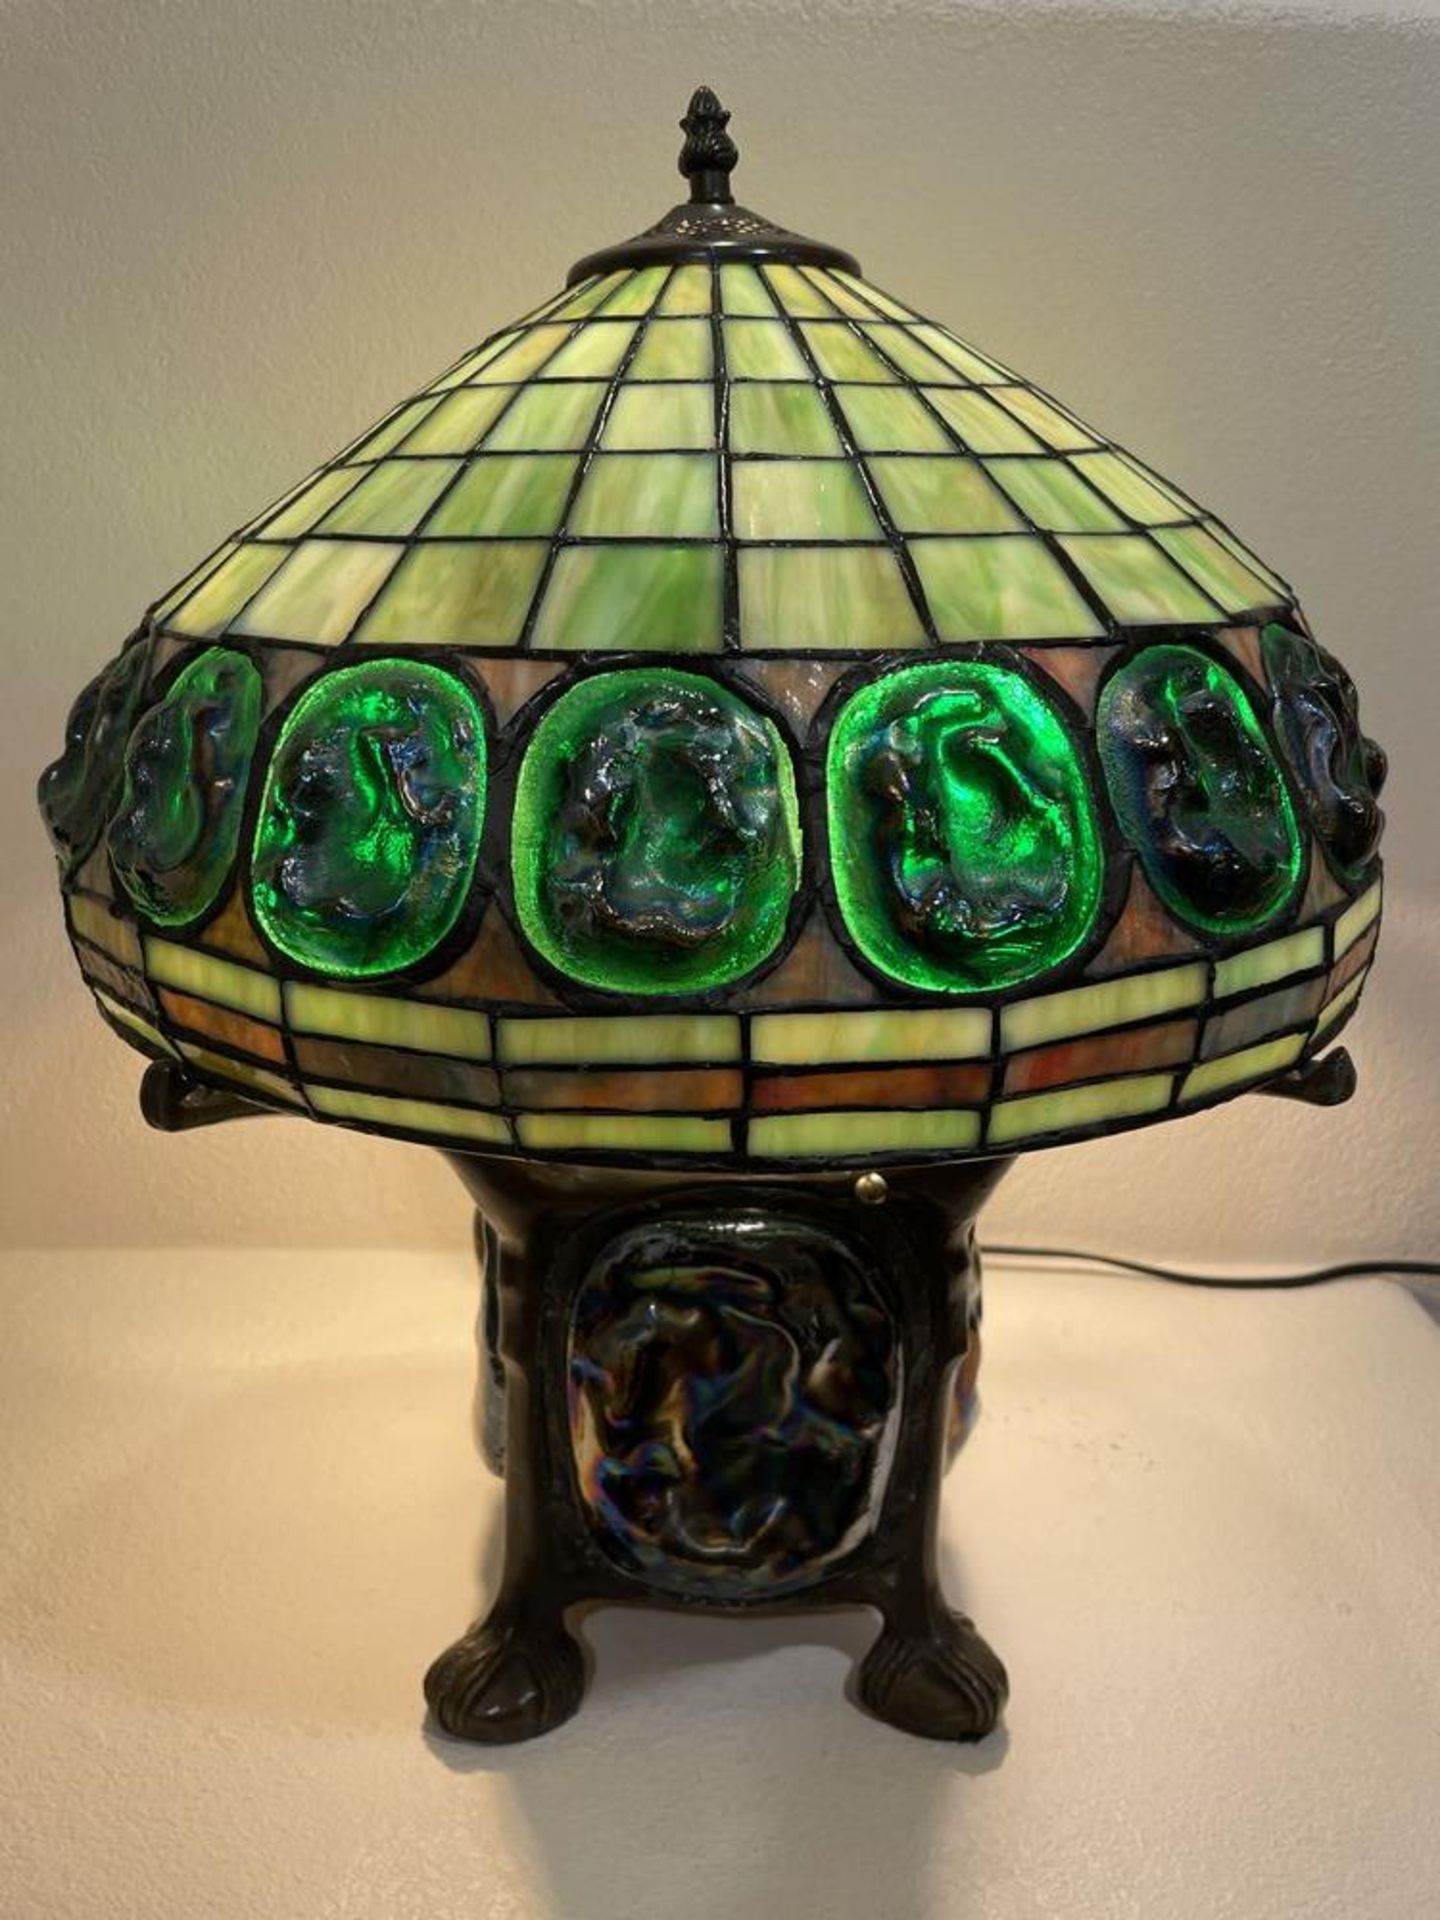 Unique Tiffany Style Four-Leg Lamp - 20 x 18" - Image 2 of 10